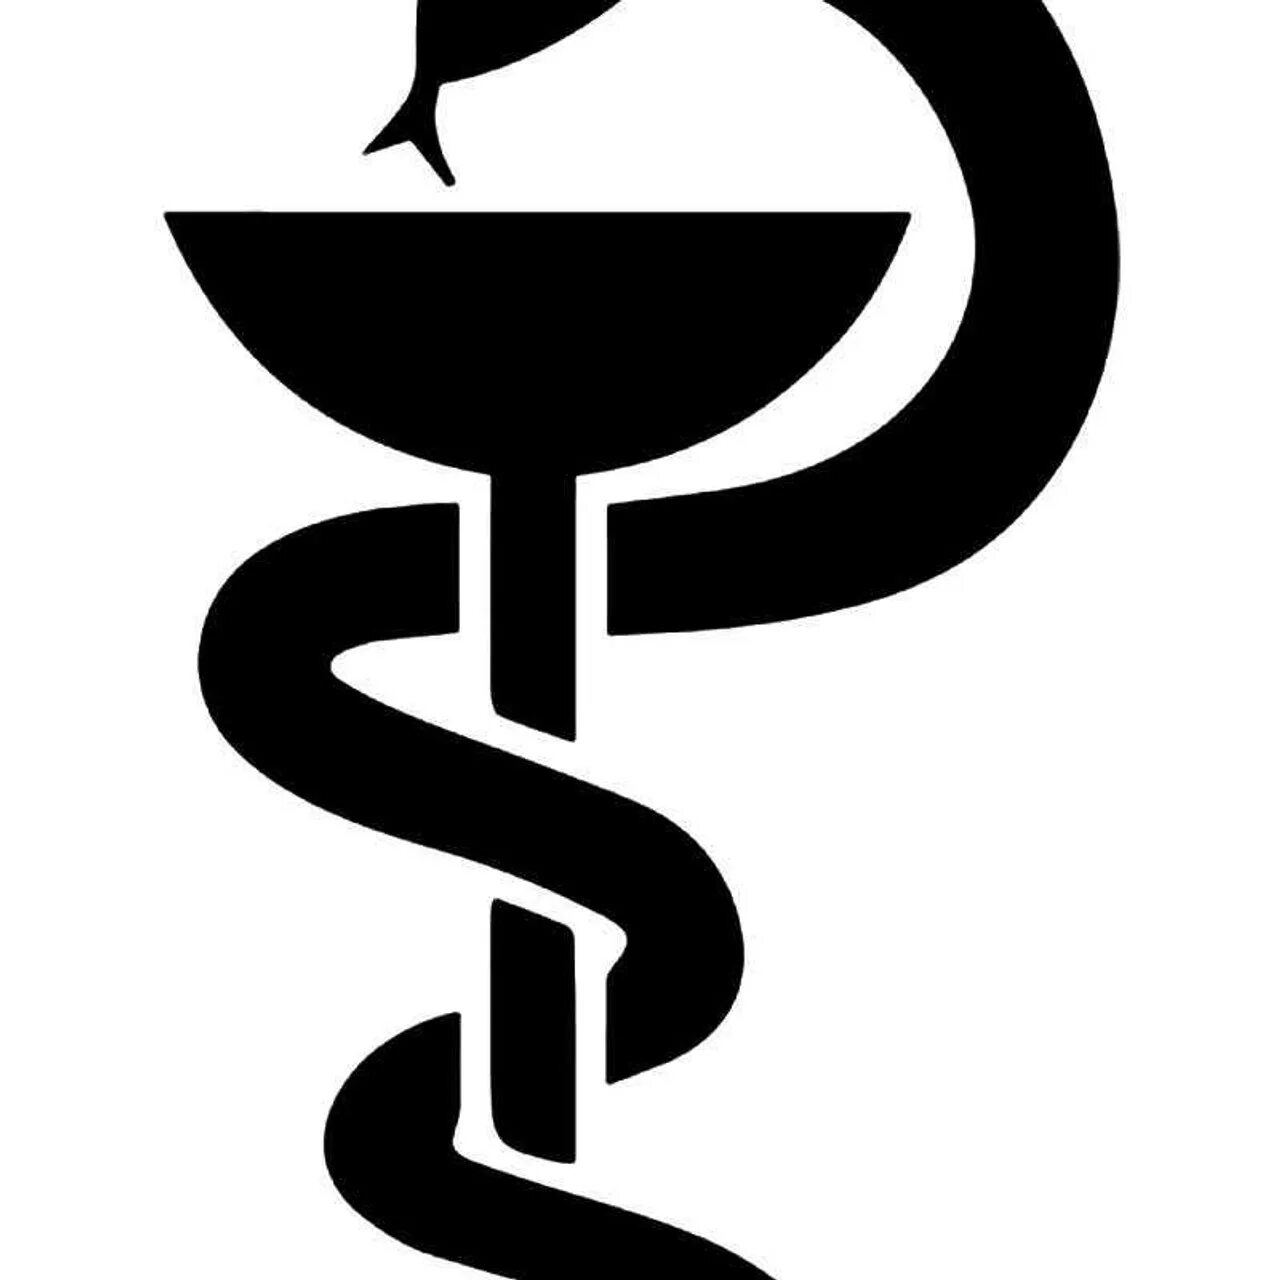 Чаша Гигеи символ. Чаша Асклепия. Сосуд Гигеи символ медицины. Асклепия – чаша со змеей.